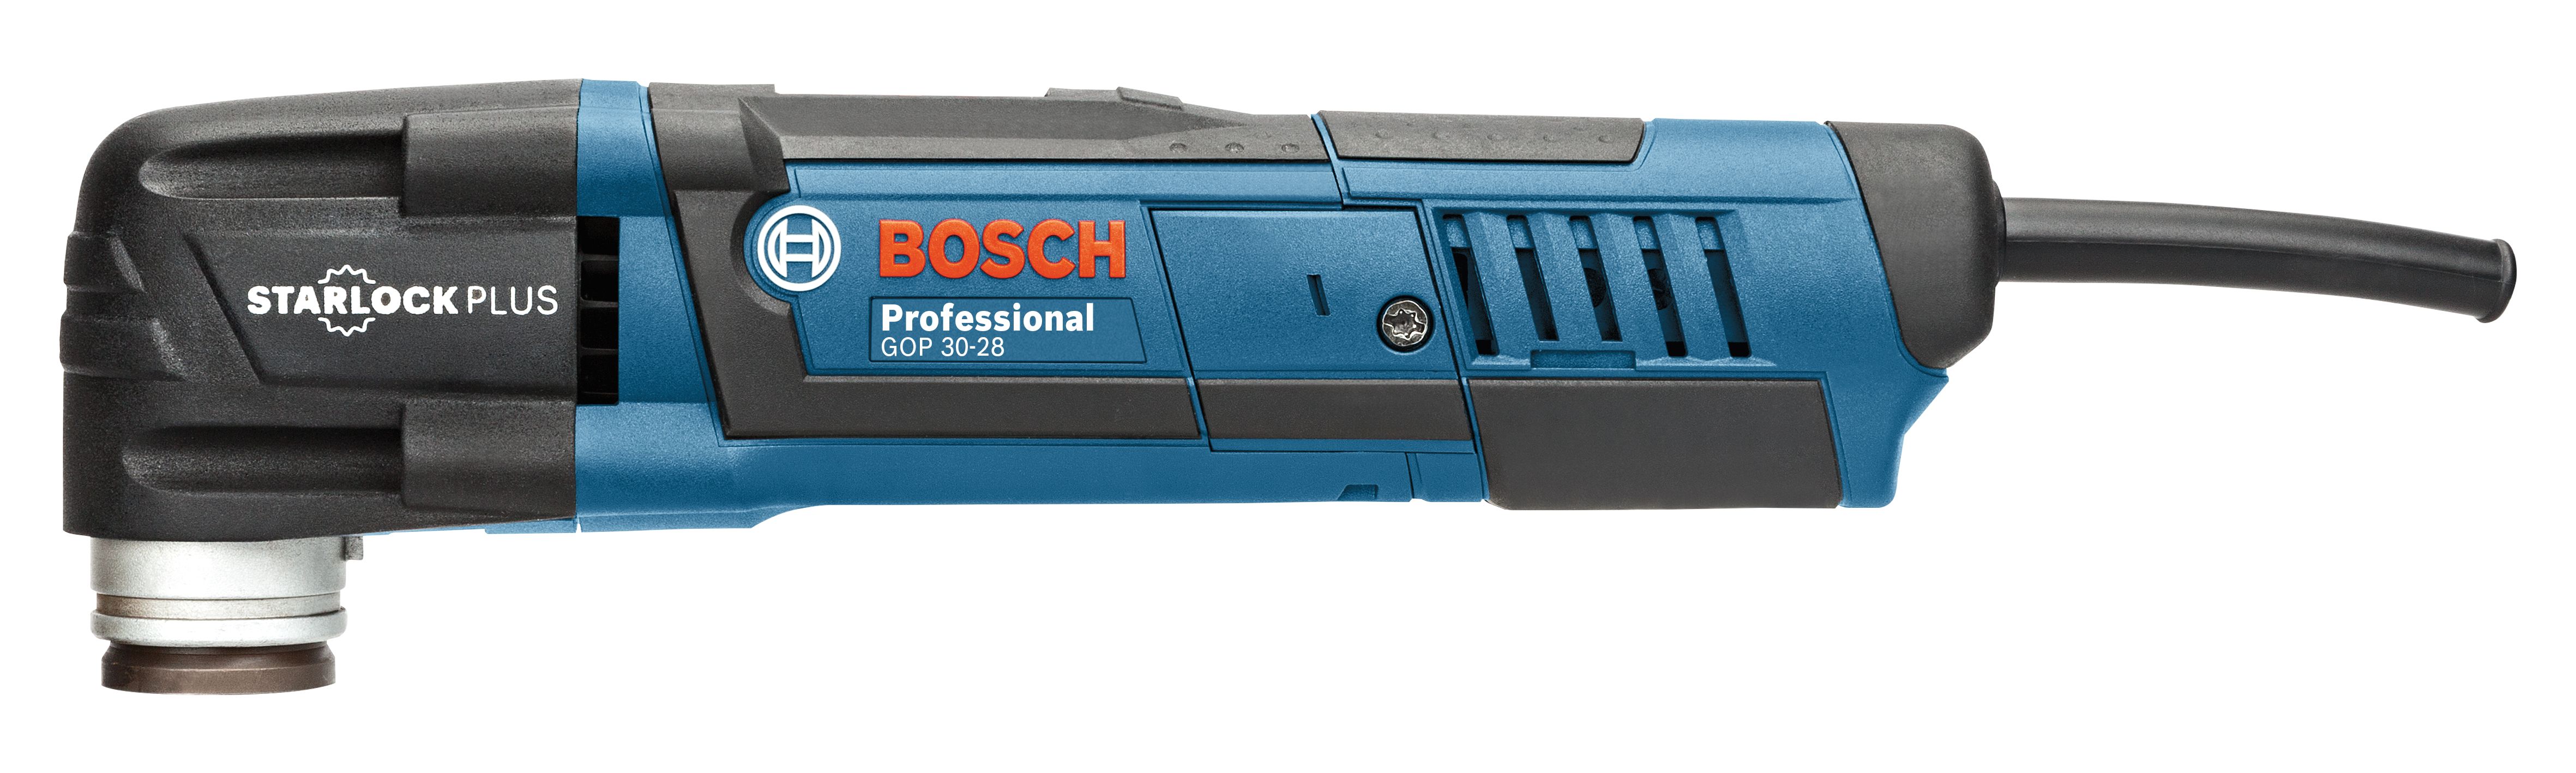 Bosch Professional GOP 30-28 Multi Tool - 300W